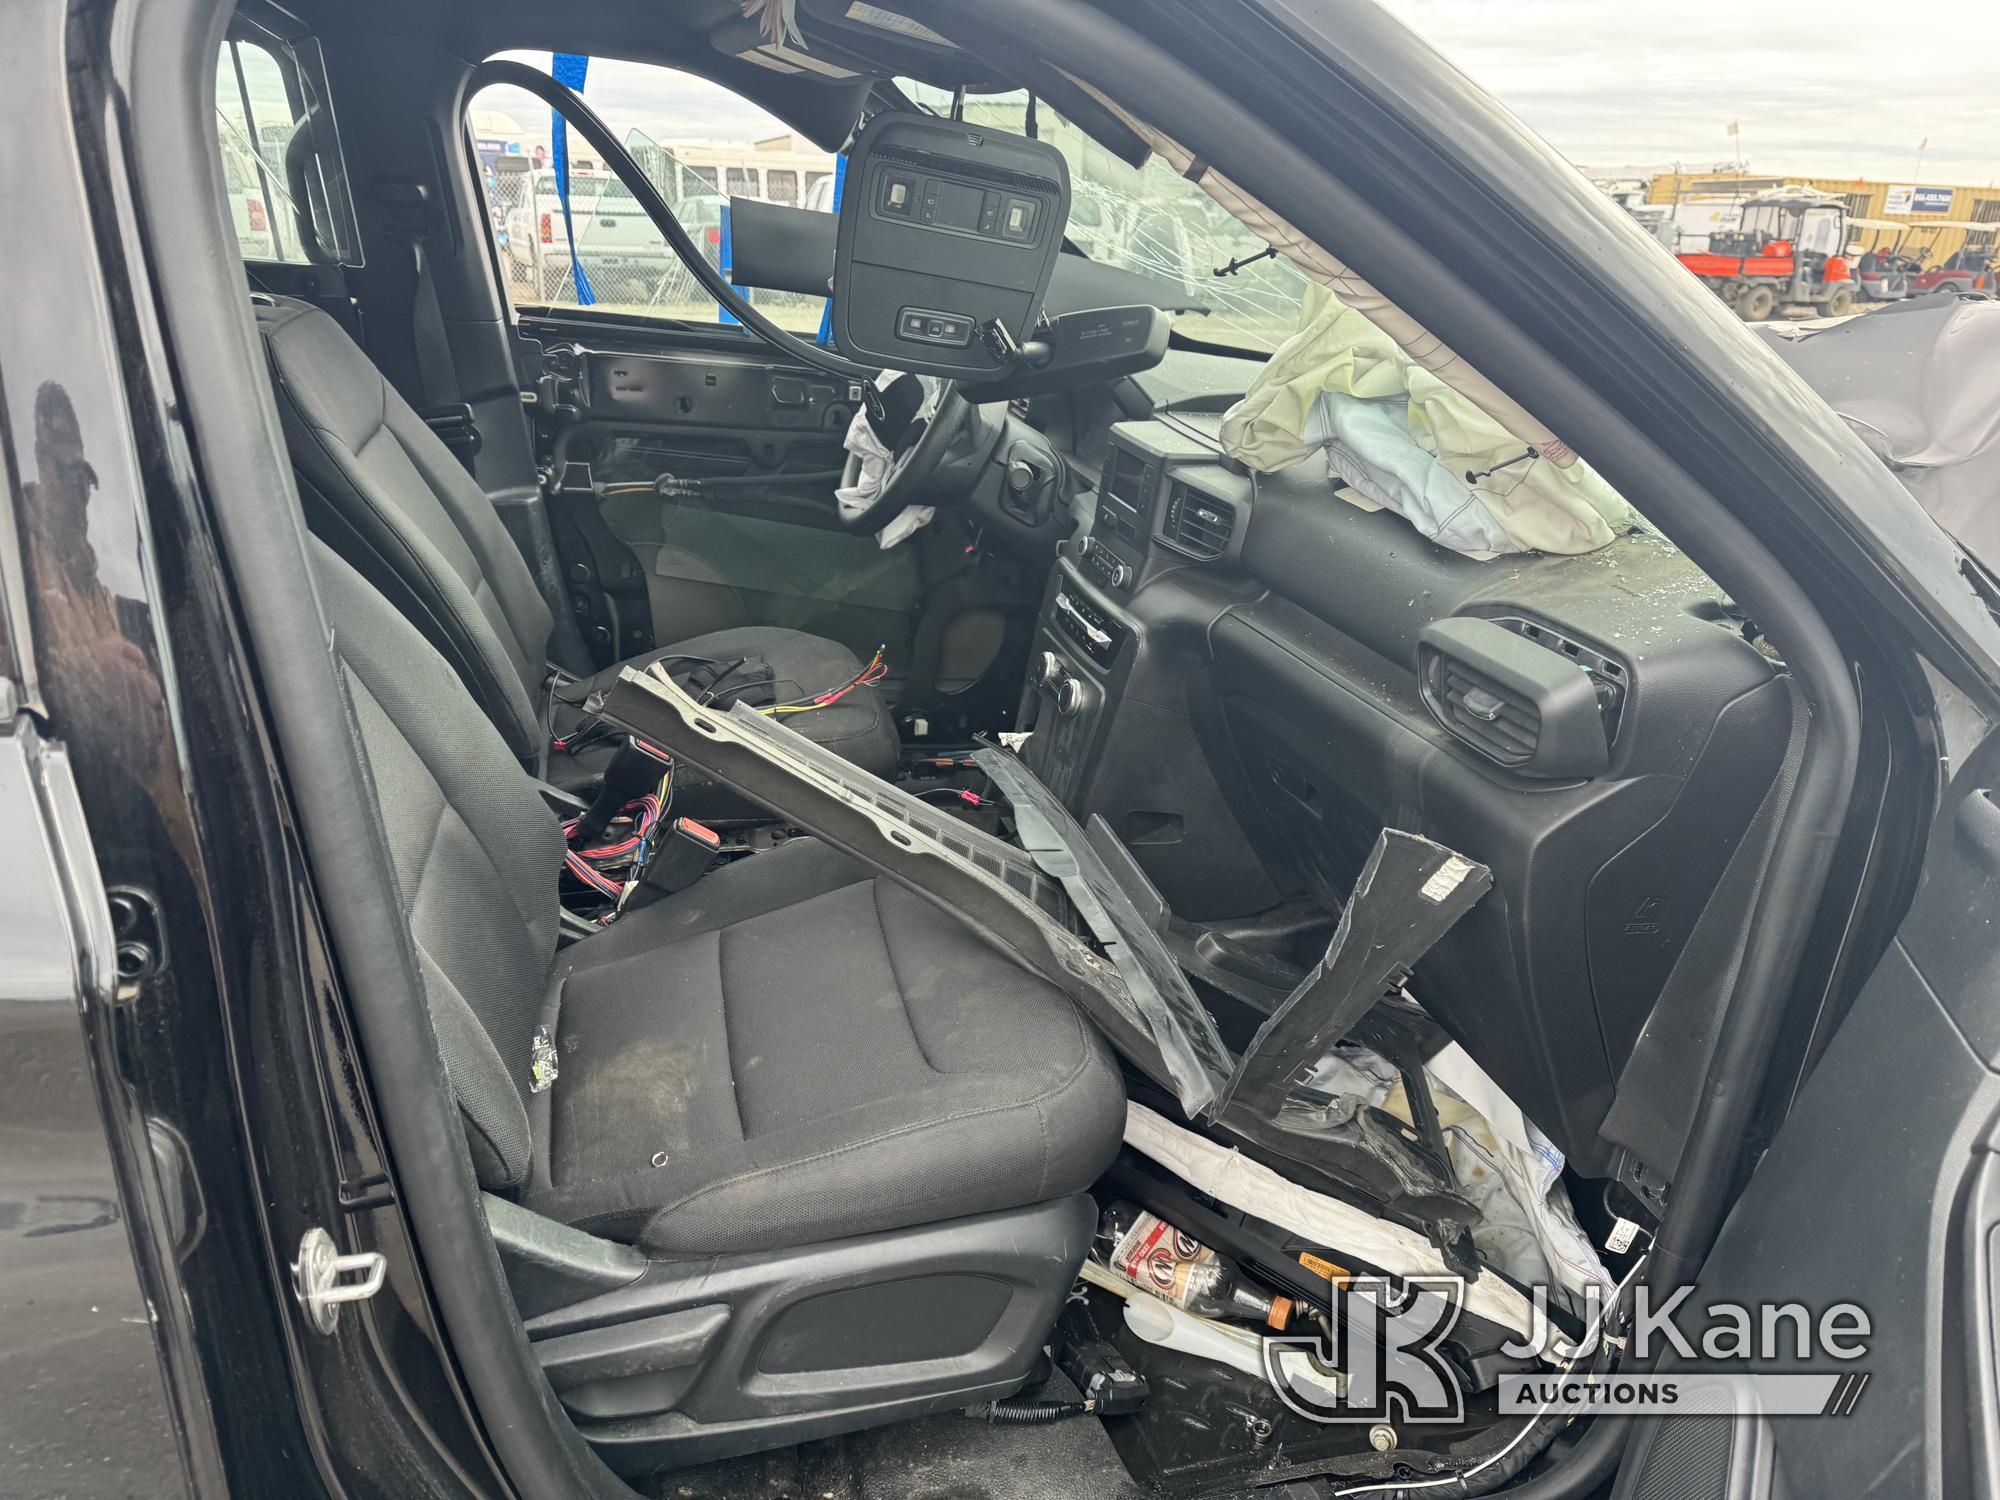 (Dixon, CA) 2020 Ford Explorer AWD Police Interceptor 4-Door Sport Utility Vehicle Not Running, Cond